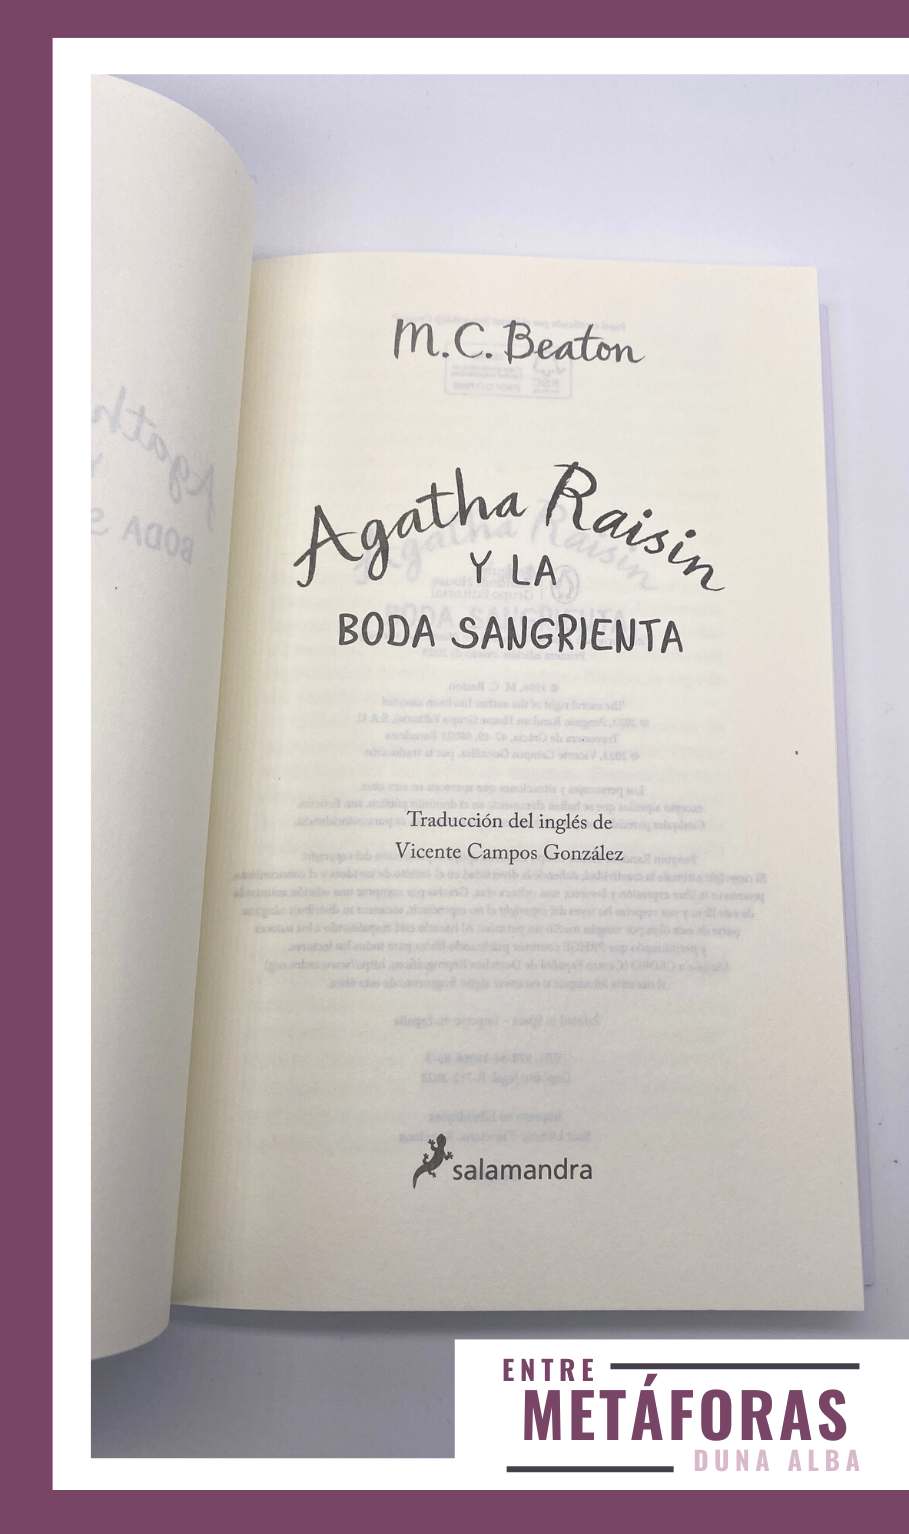 Agatha Raisin y la boda sangrienta, de M.C. Beaton